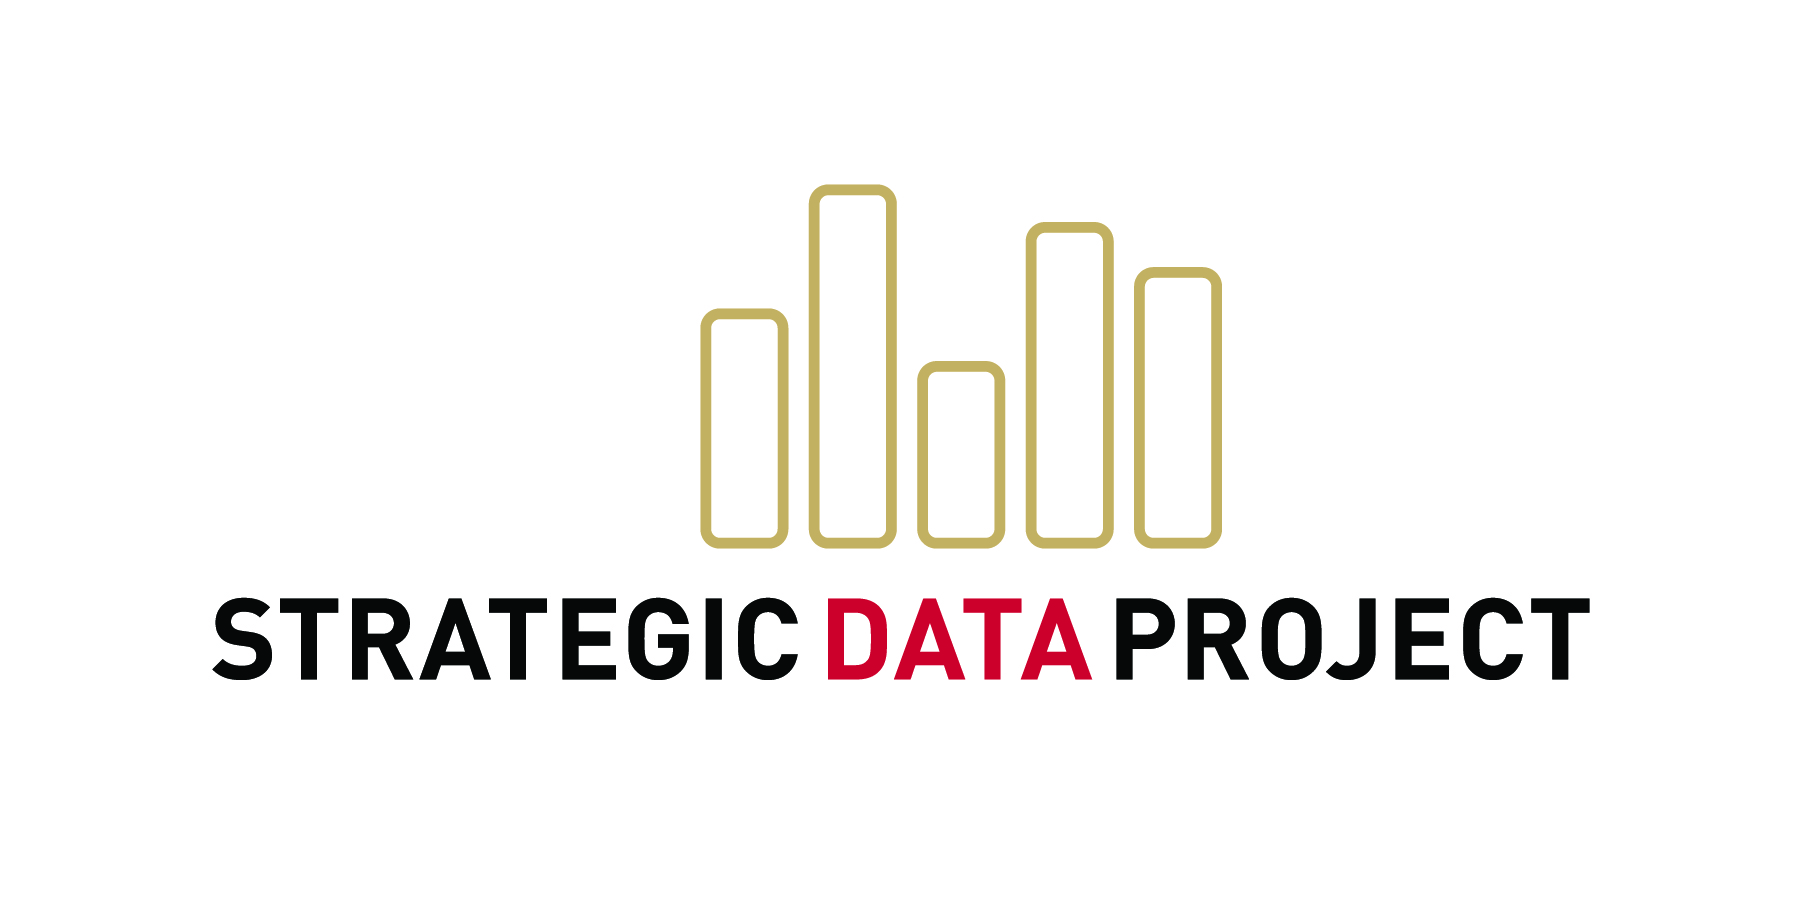 Strategic Data Project logo